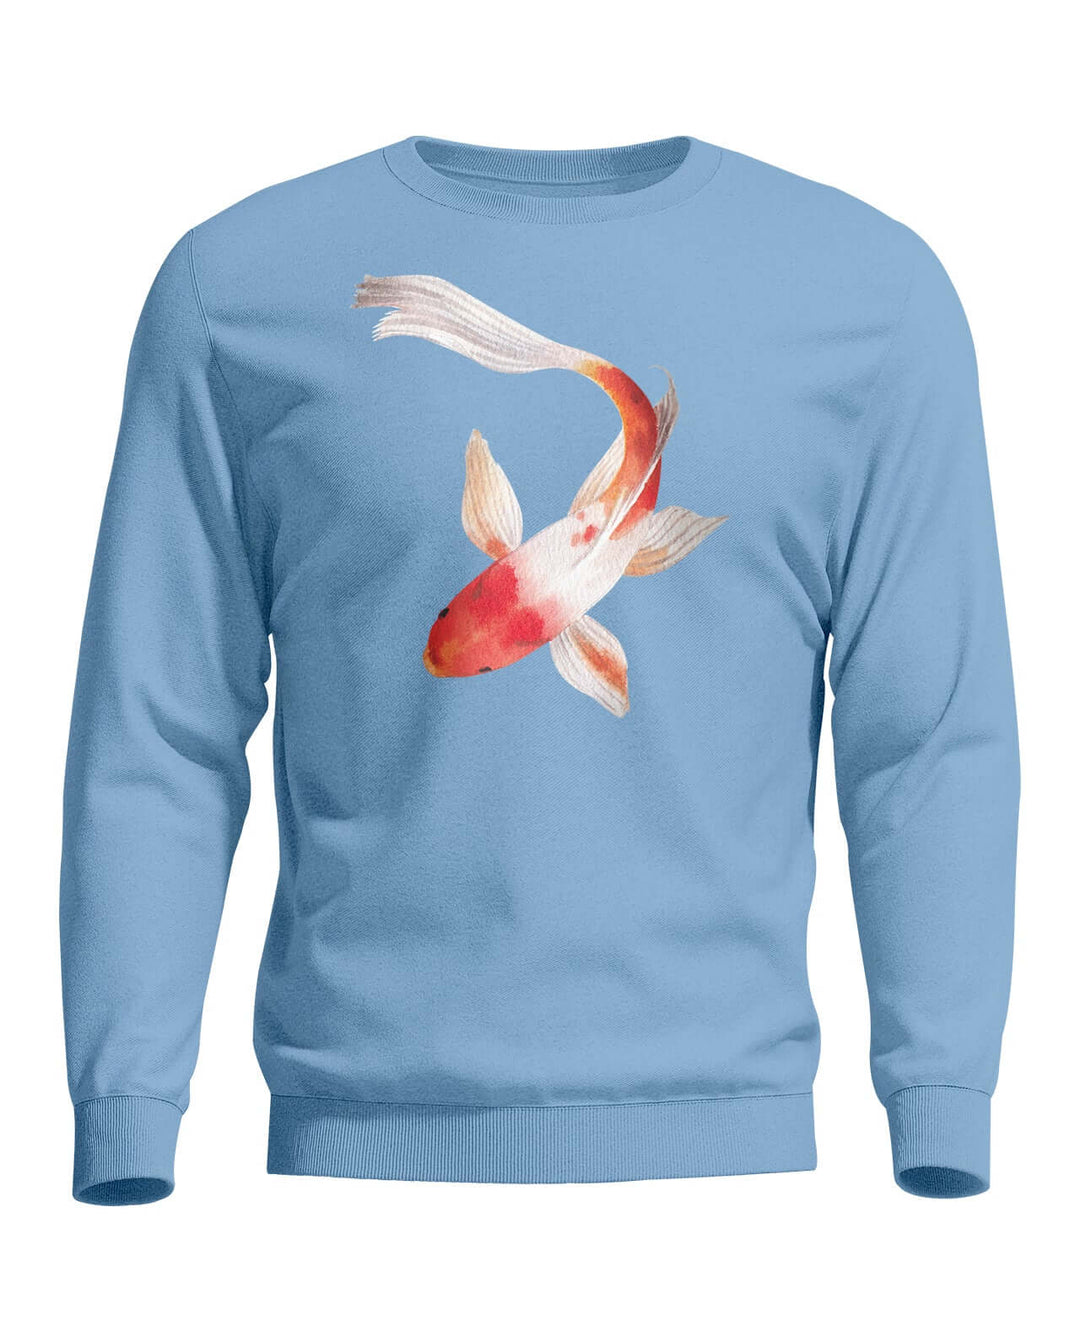 Koi Fish Sweatshirt